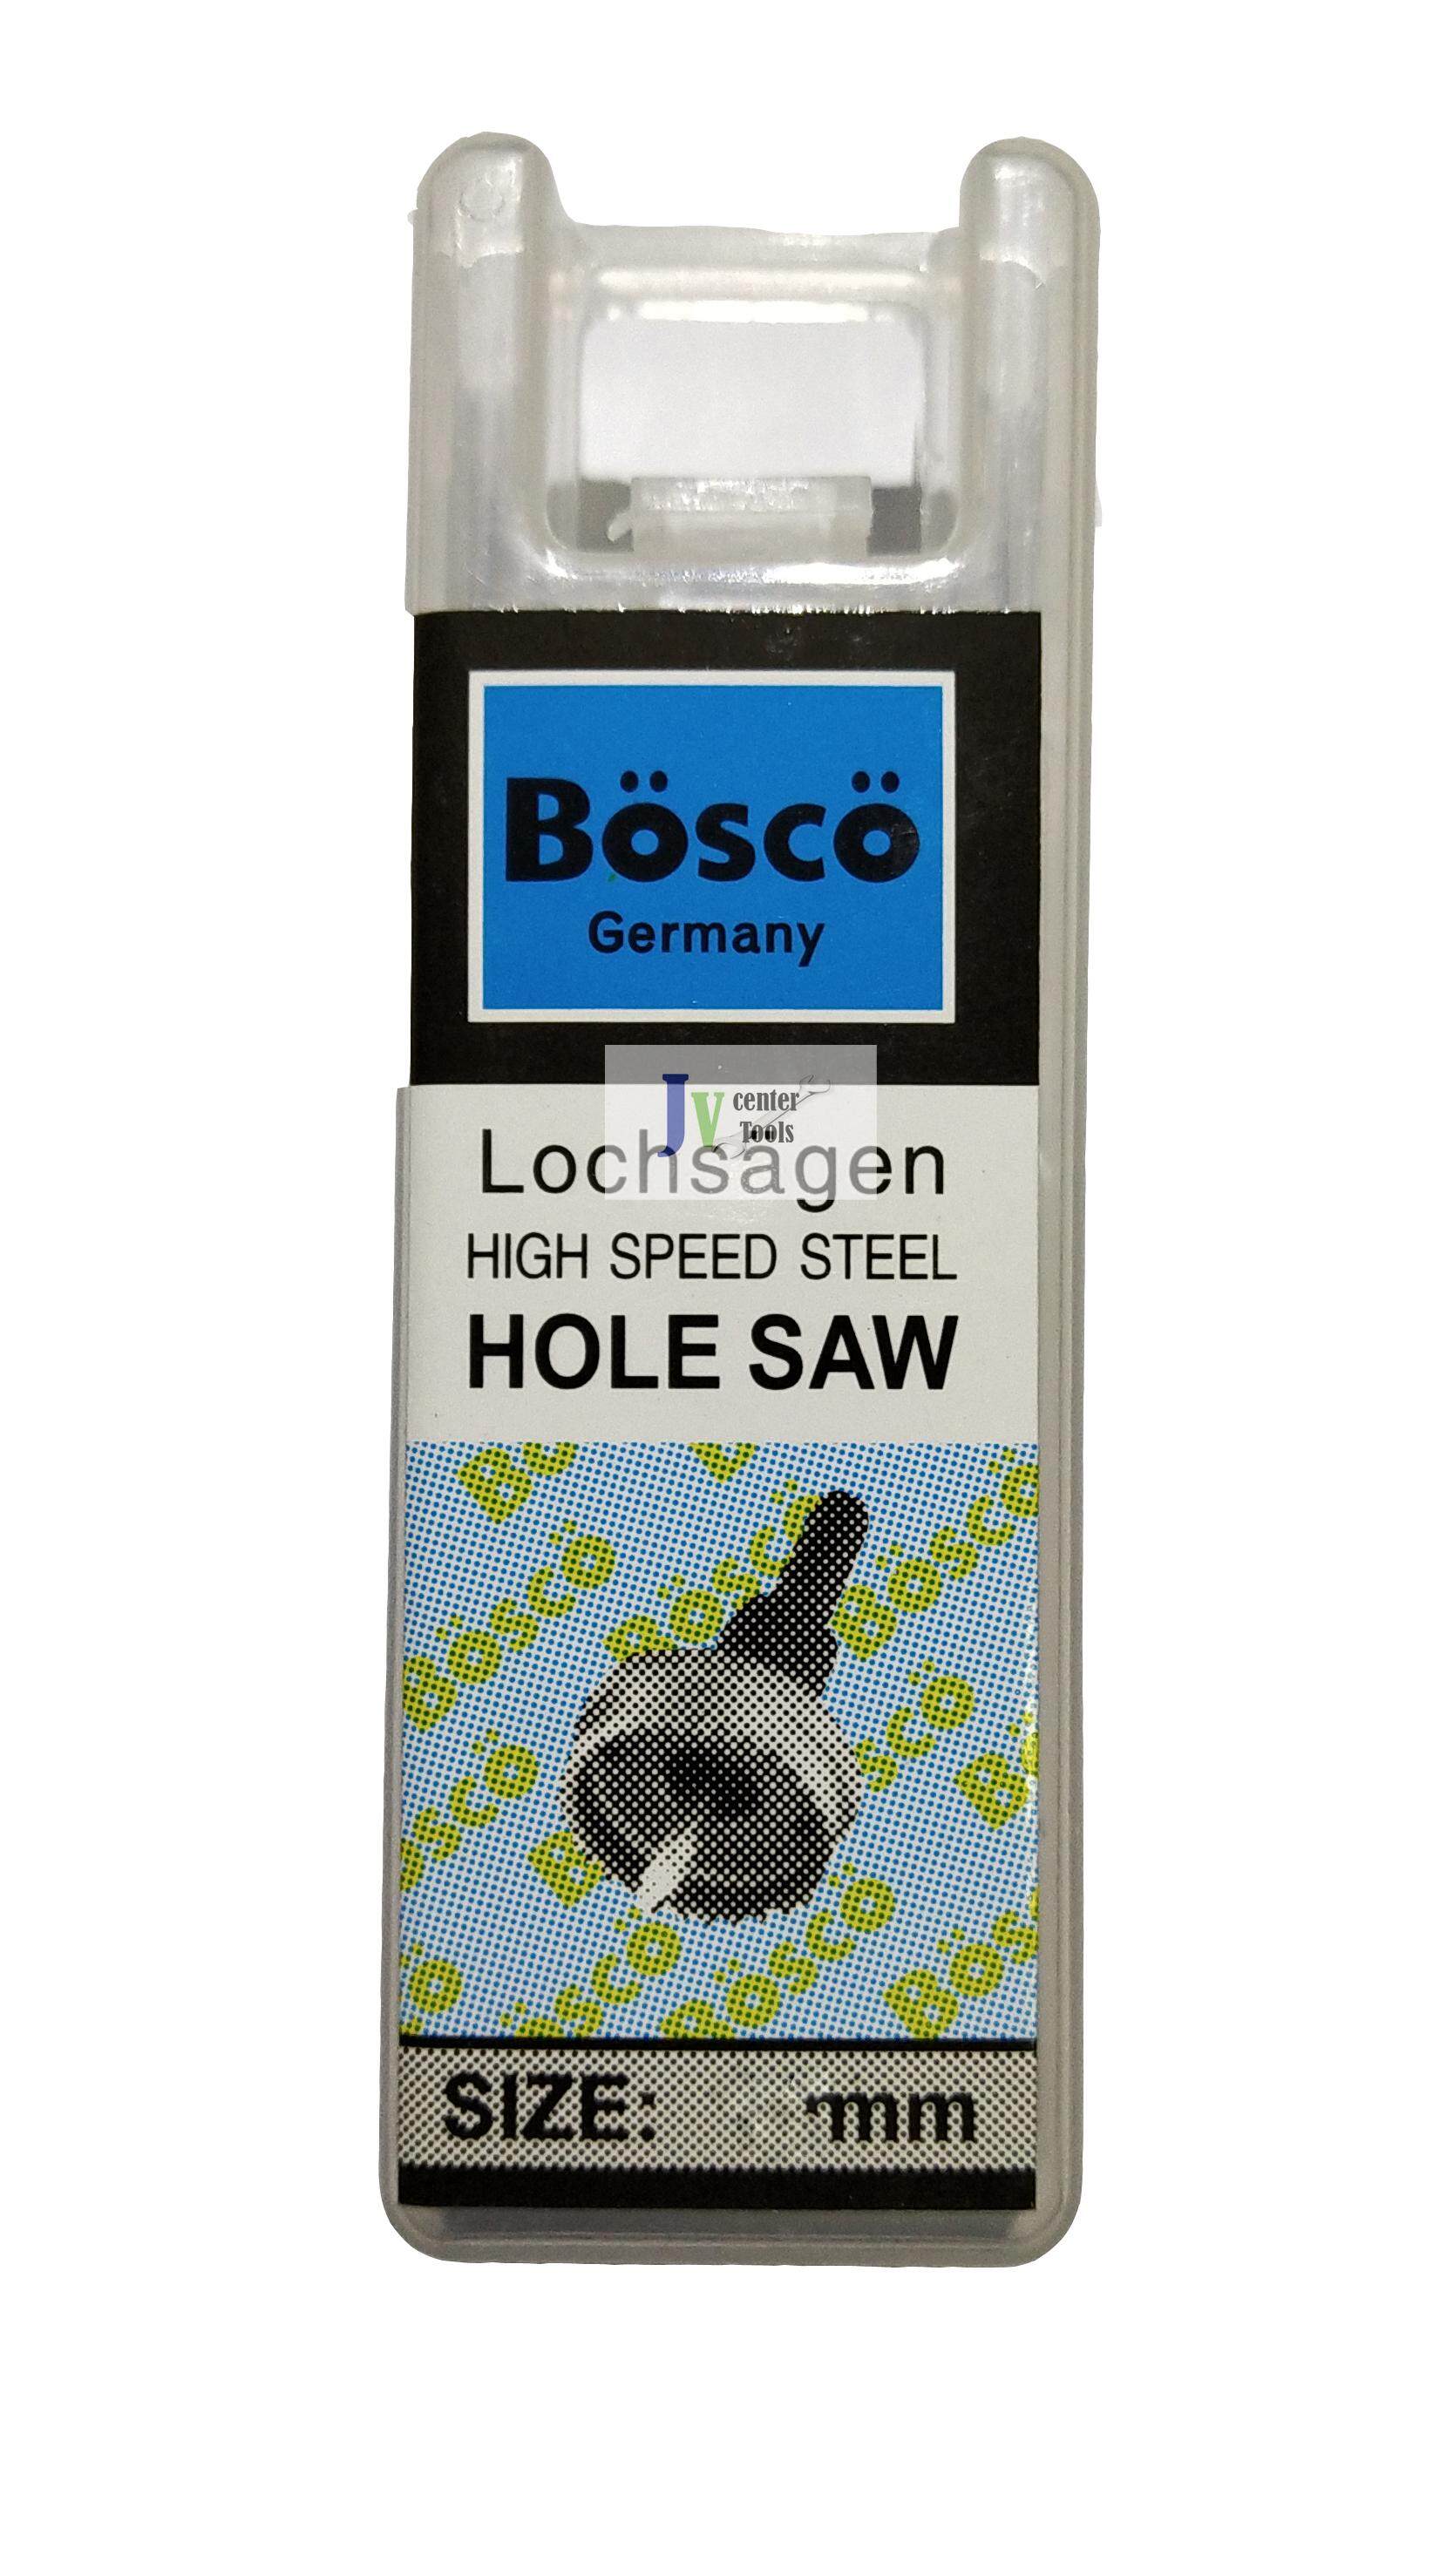 Bosco Hole Saw High Speed Steel โฮลซอร์เจาะเหล็ก (มีขนาดให้เลือกตั้งแต่ 13 - 76mm.)